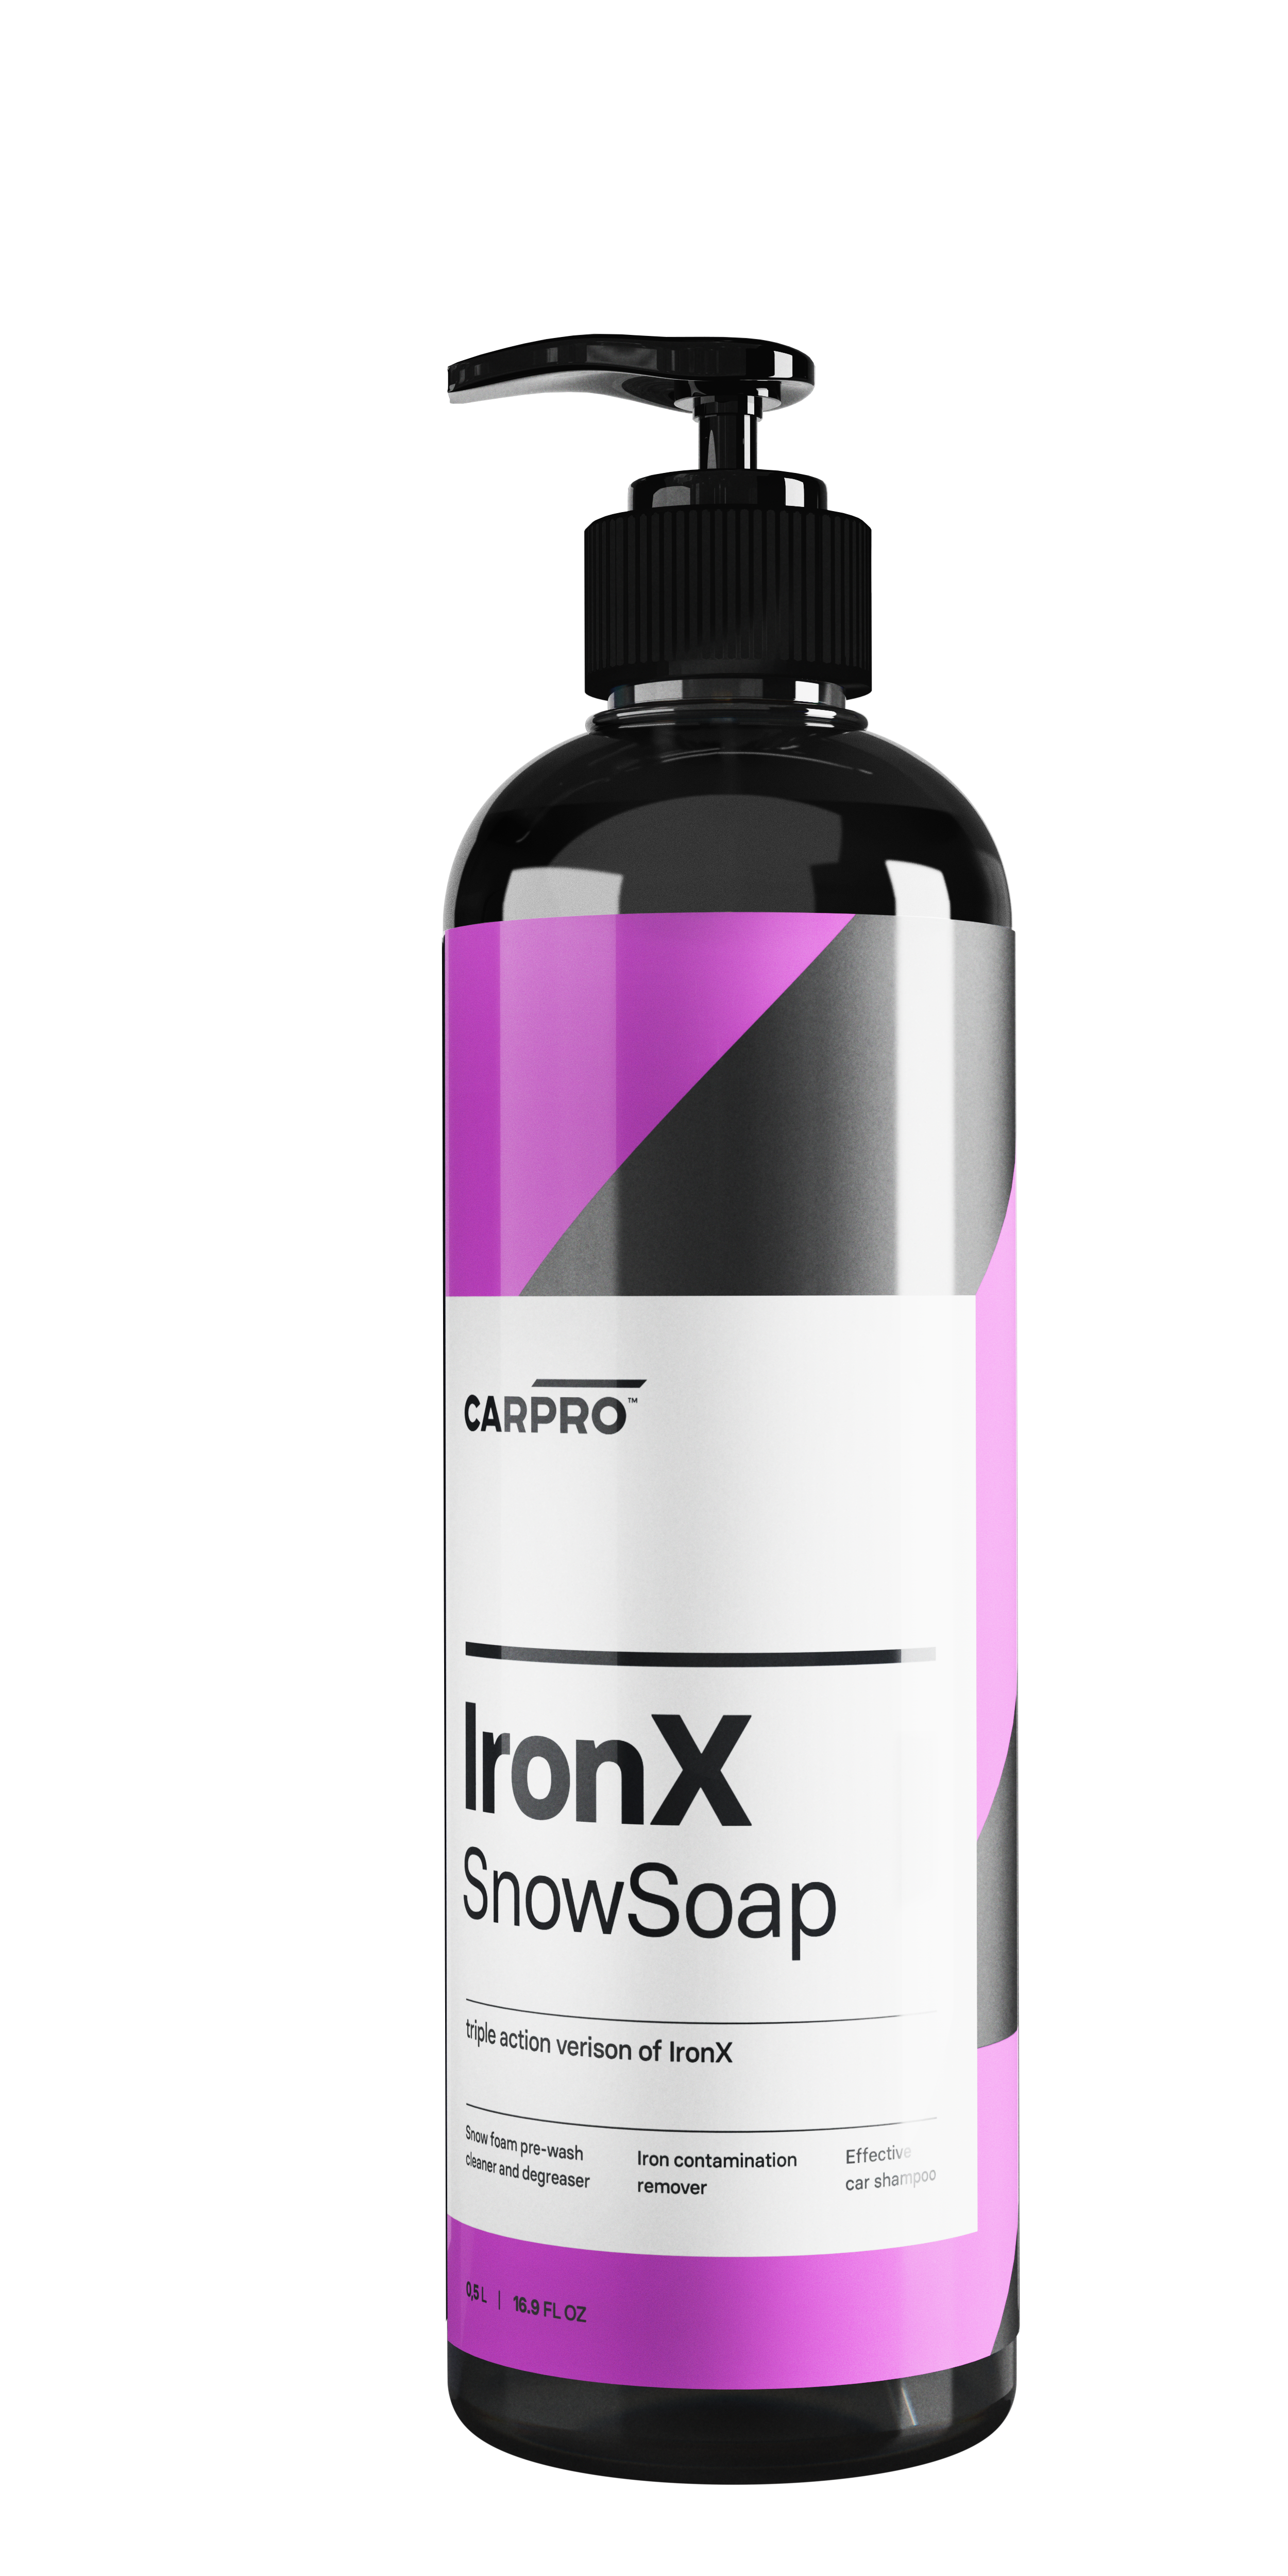 CARPRO IronX Snow Soap 500mL - Triple action car shampoo